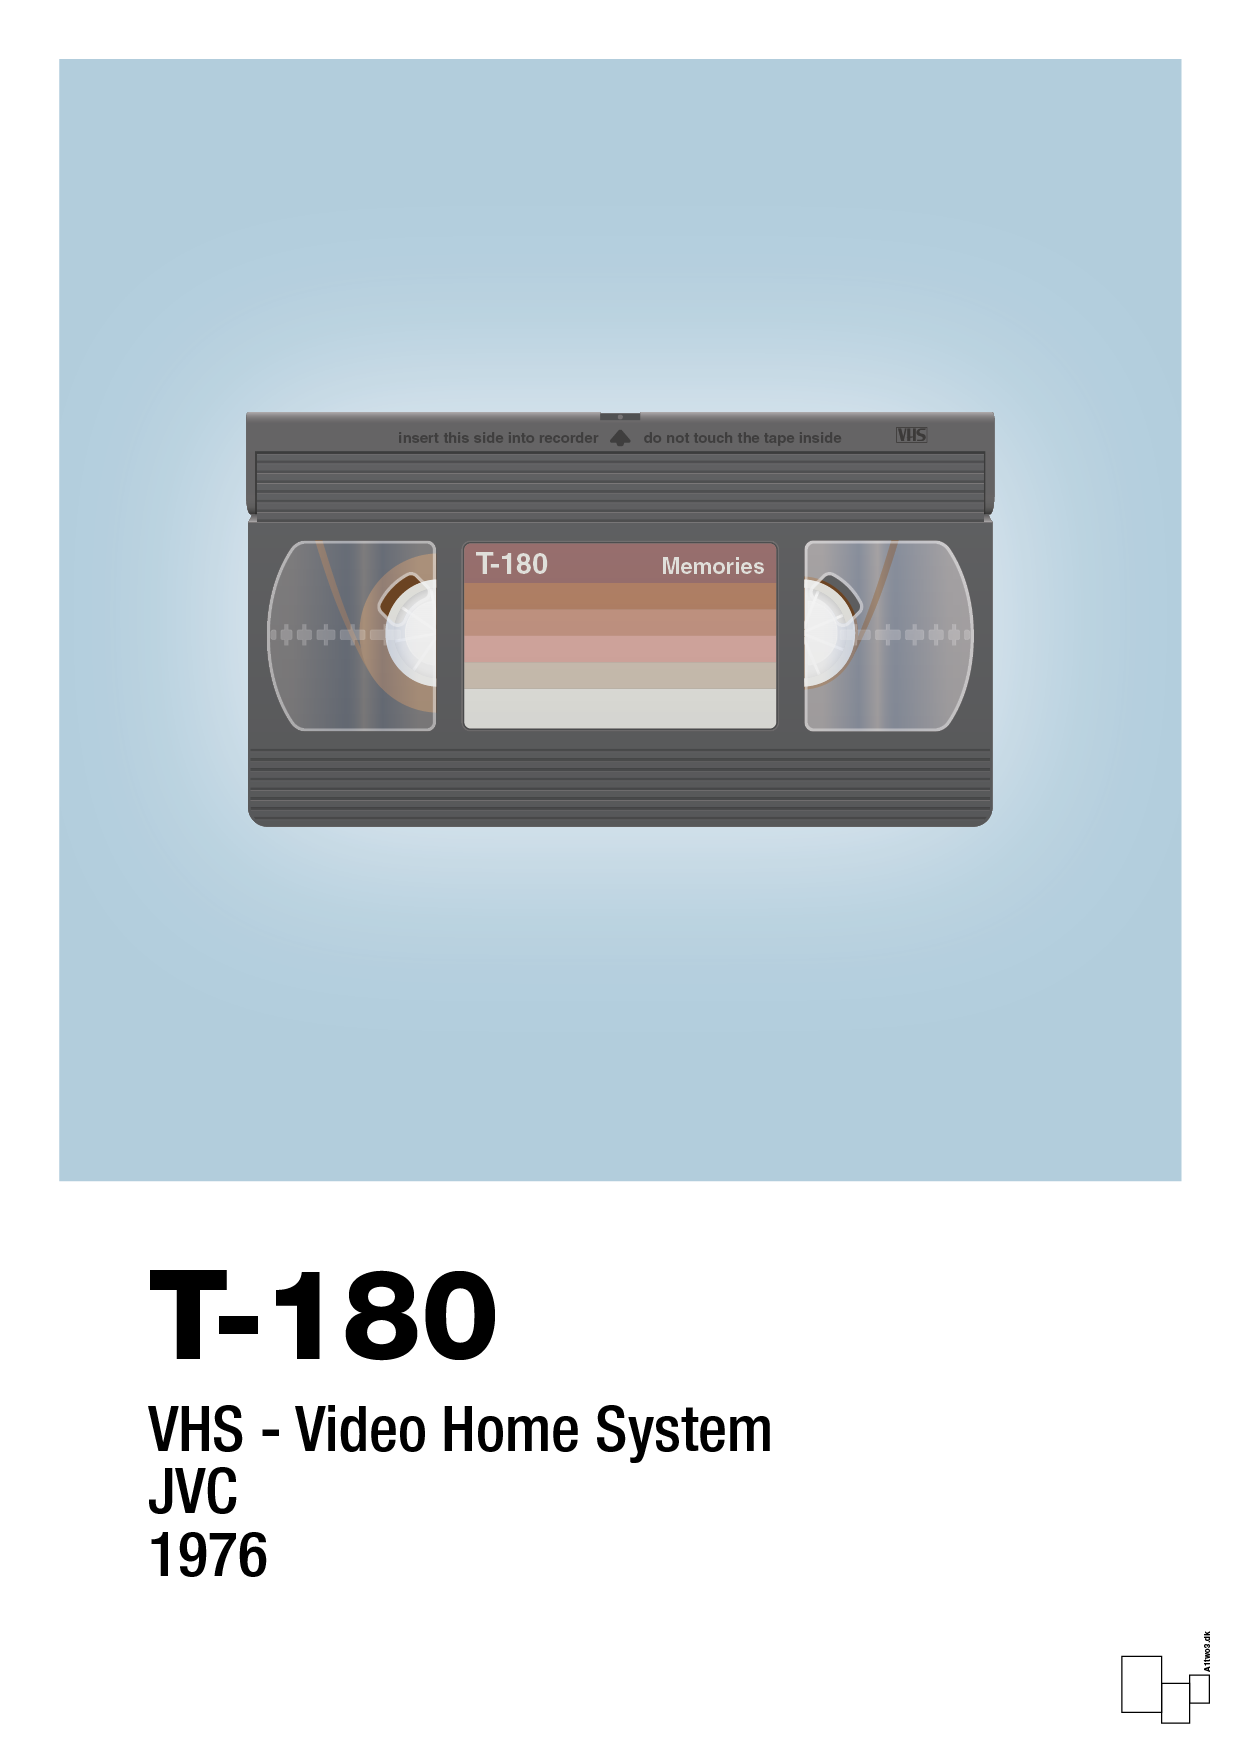 videobånd t-180 - Plakat med Grafik i Heavenly Blue